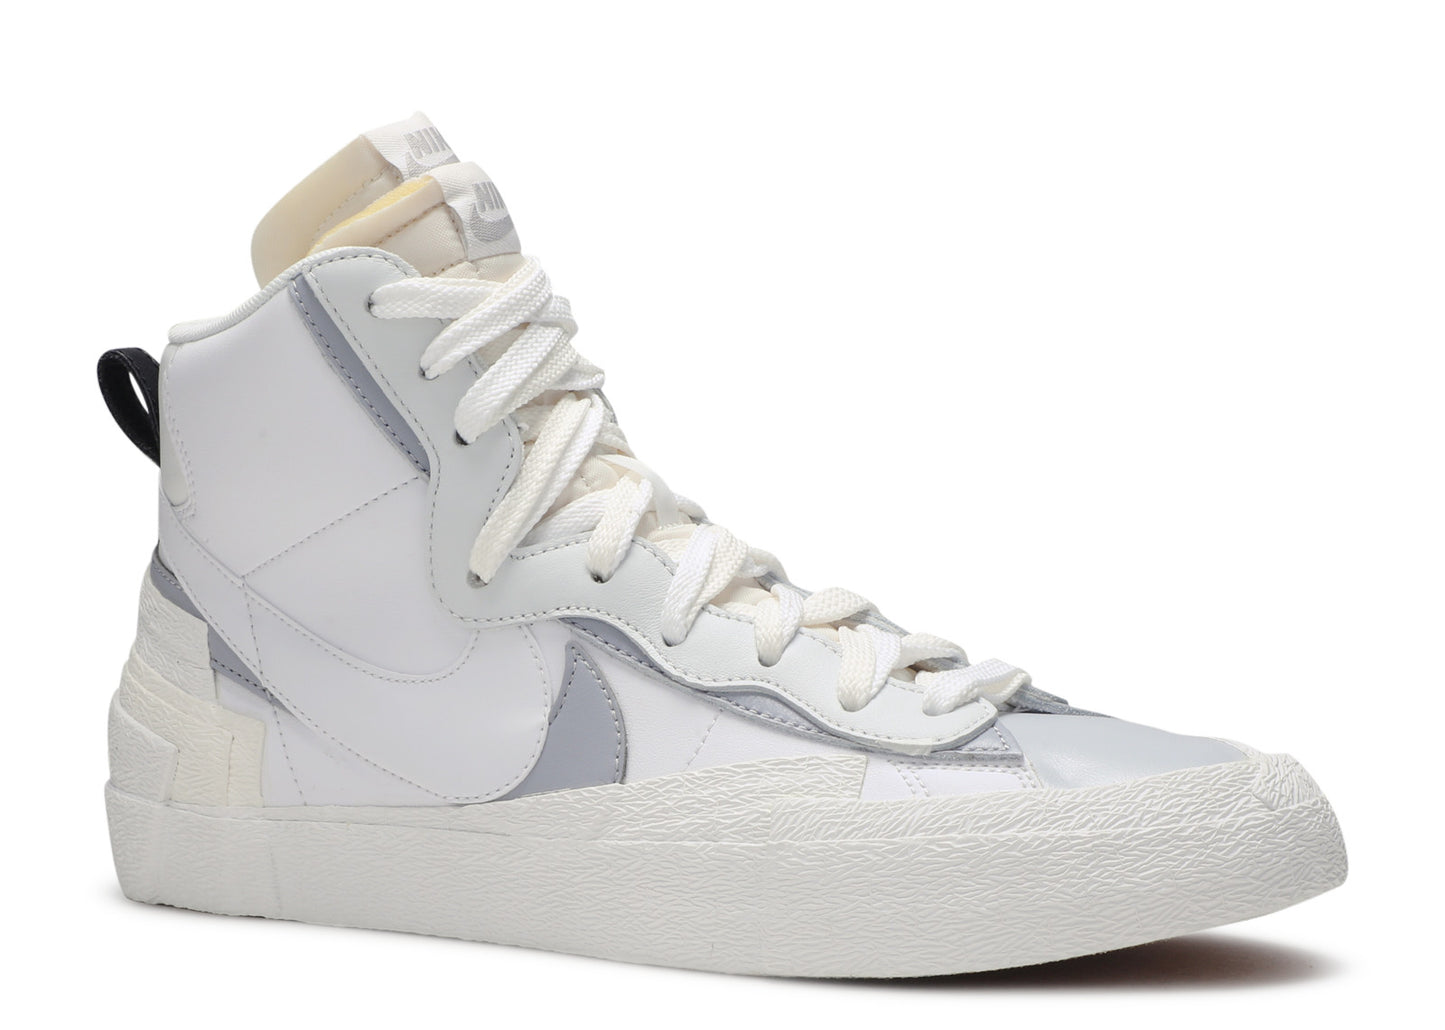 Sacai x Nike Blazer Mid "White/Grey"